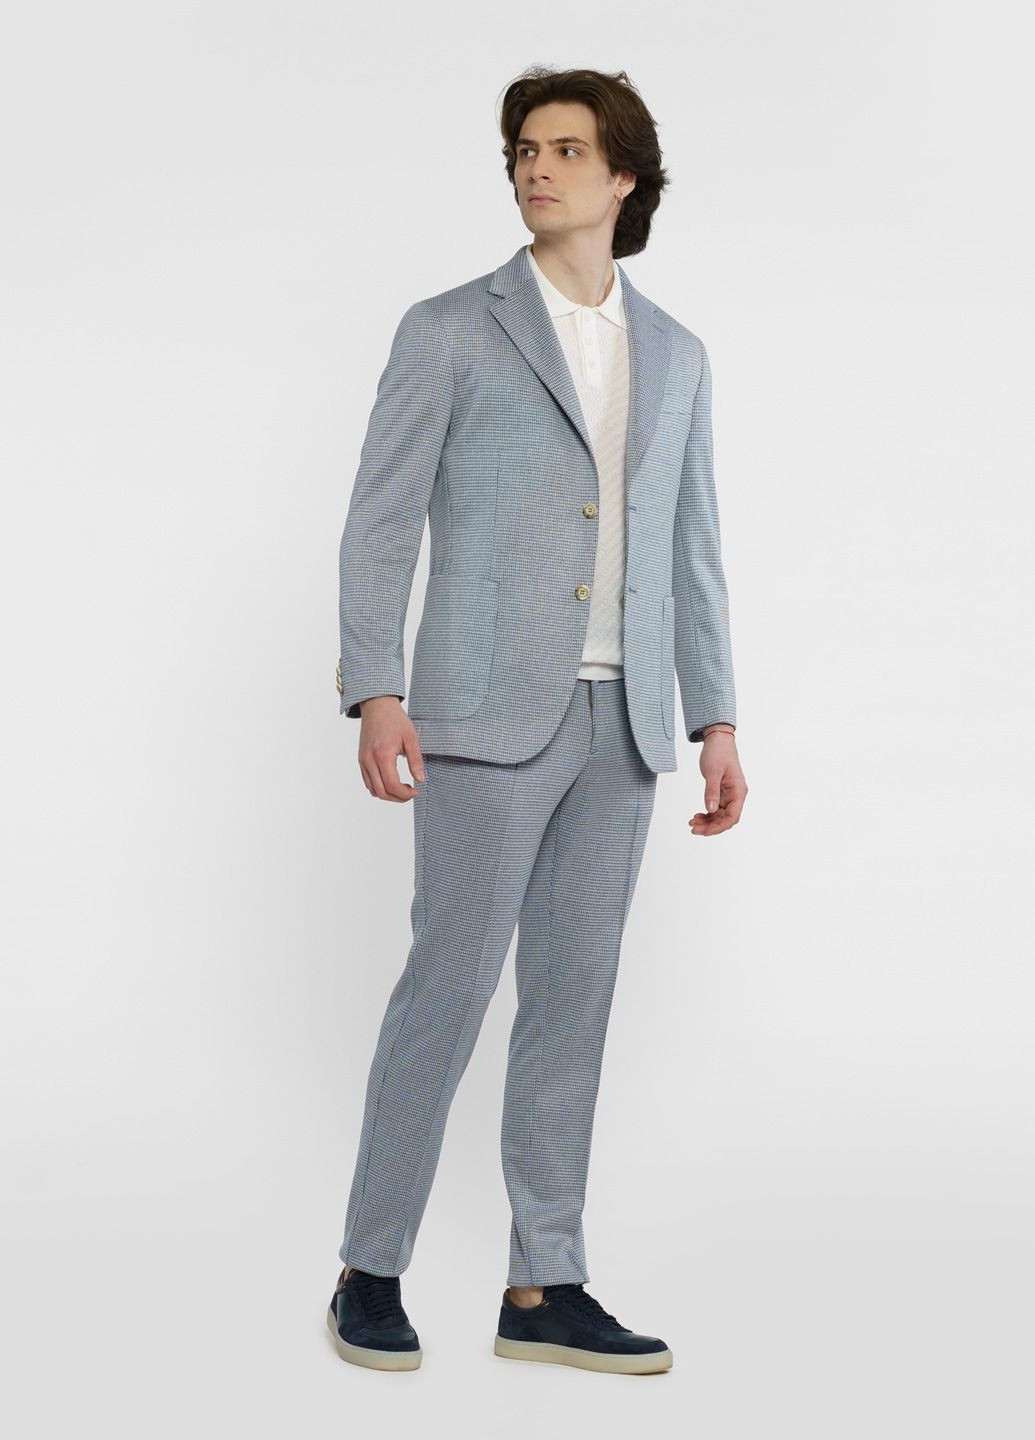 Пиджак мужской серый Arber napoli jersey (291064309)